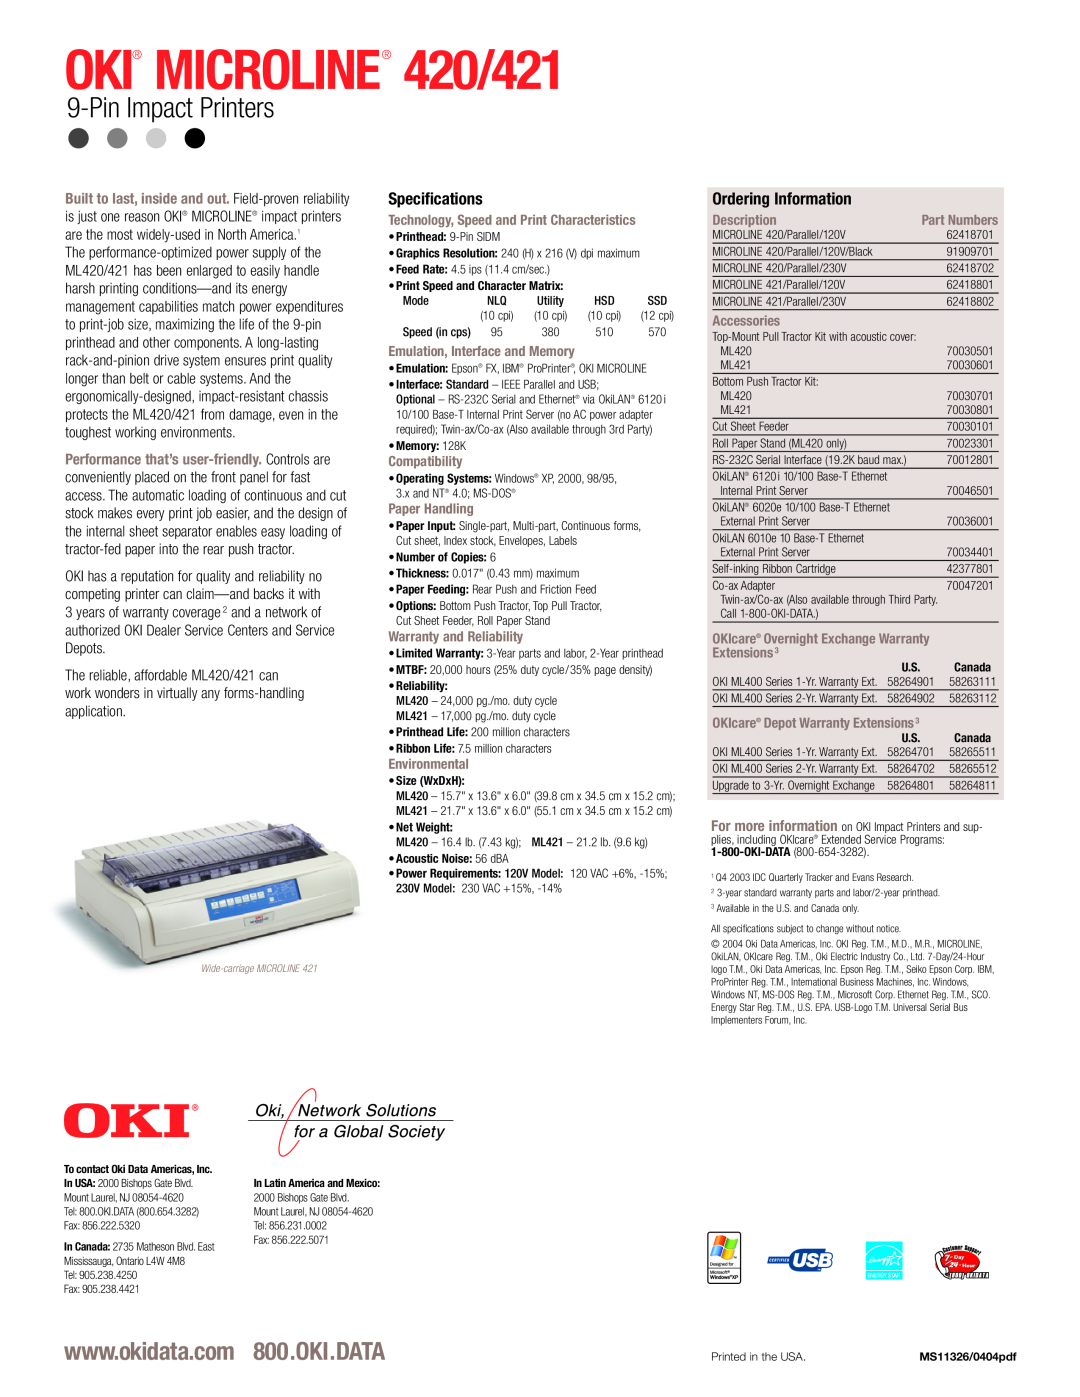 Oki warranty OKI MICROLINE 420/421, Pin Impact Printers, Specifications, Ordering Information 